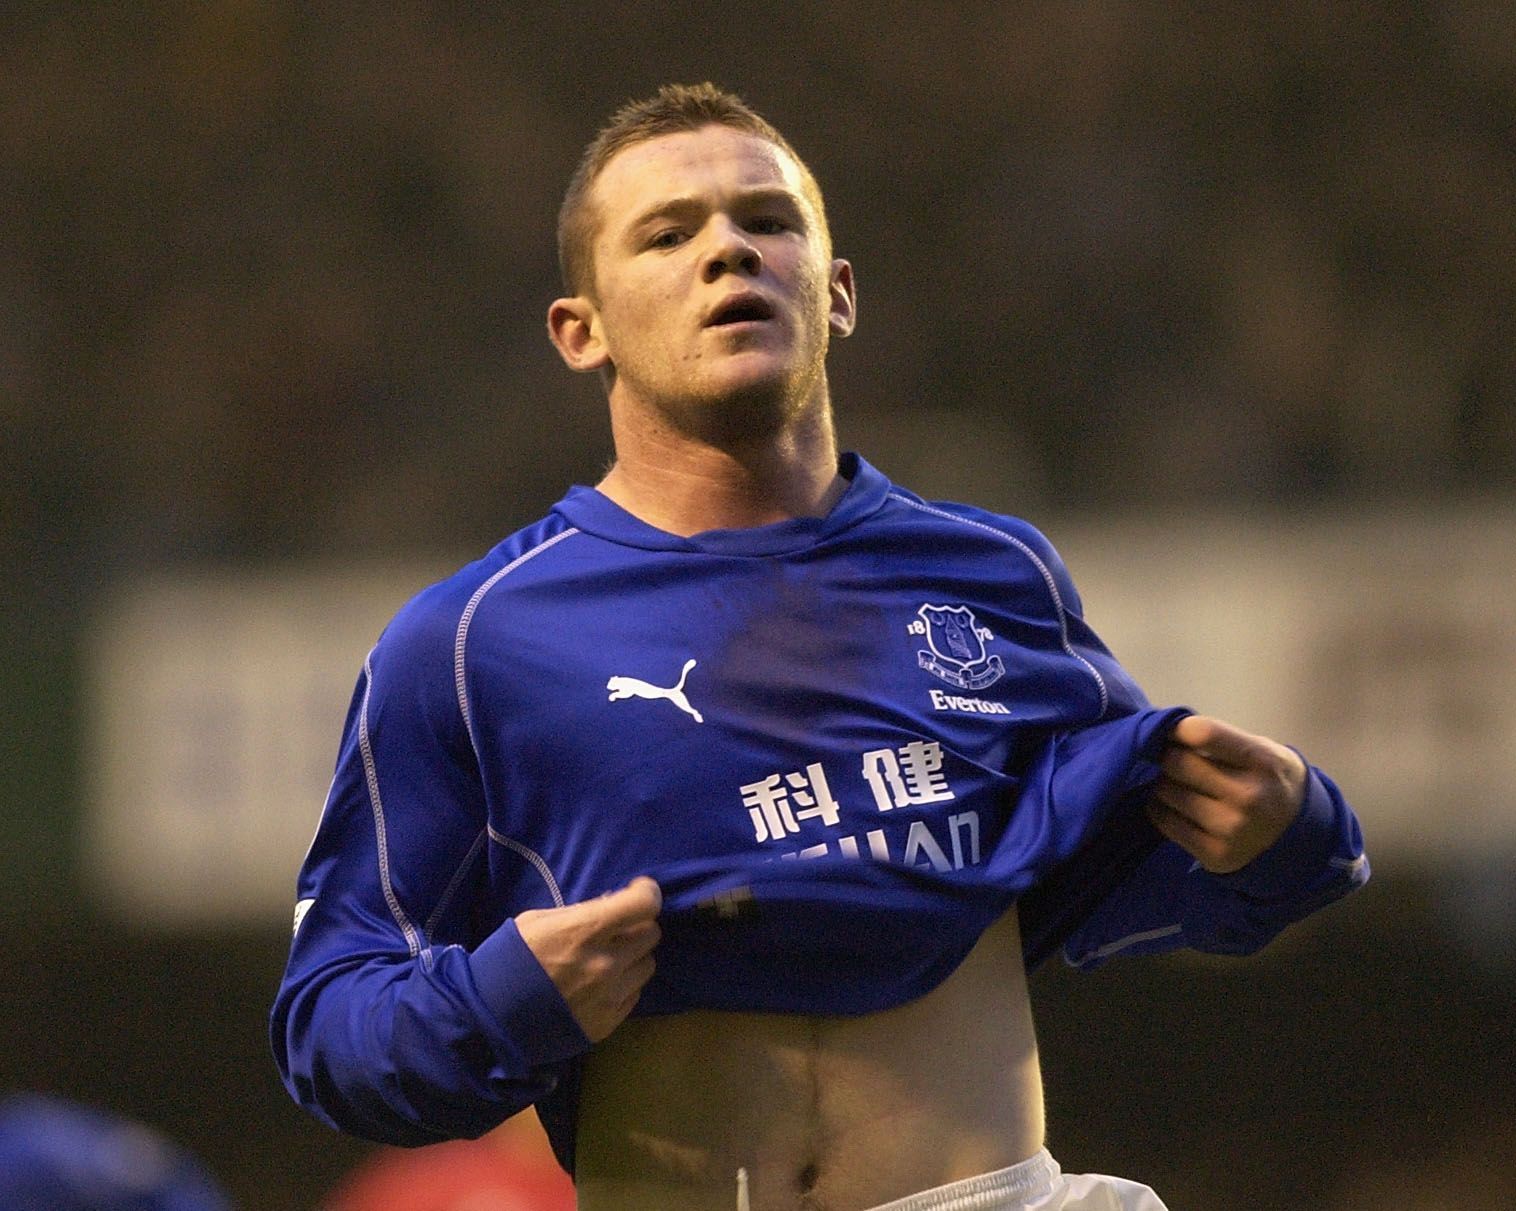 Wayne Rooney scored a thunderbolt against Arsenal in 2002.